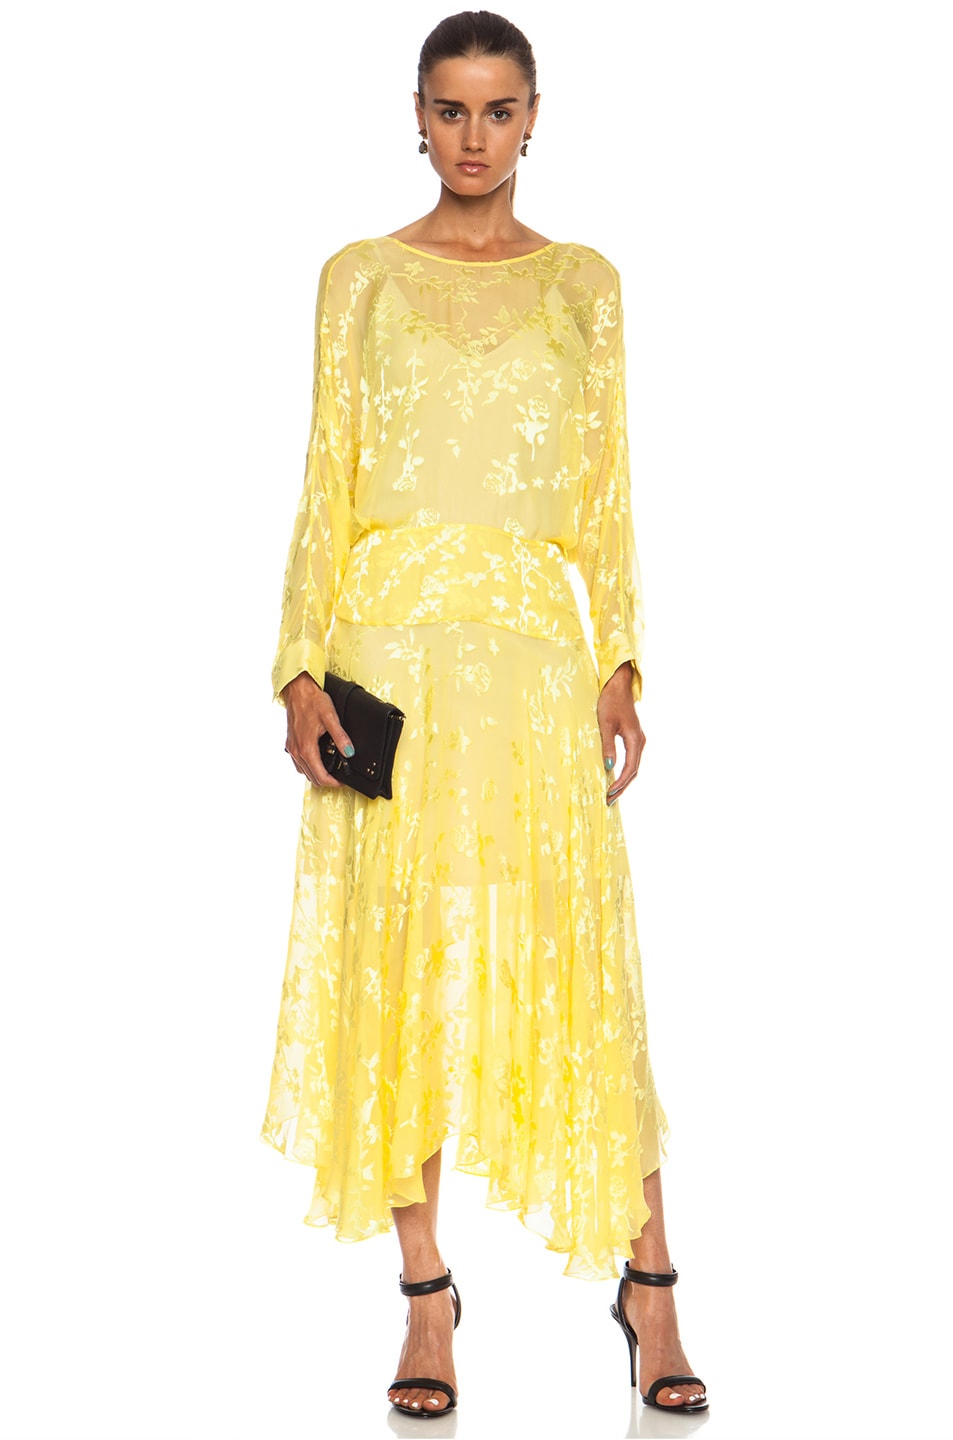 Preen by Thornton Bregazzi Norma Silk-Blend Dress in Yellow | FWRD